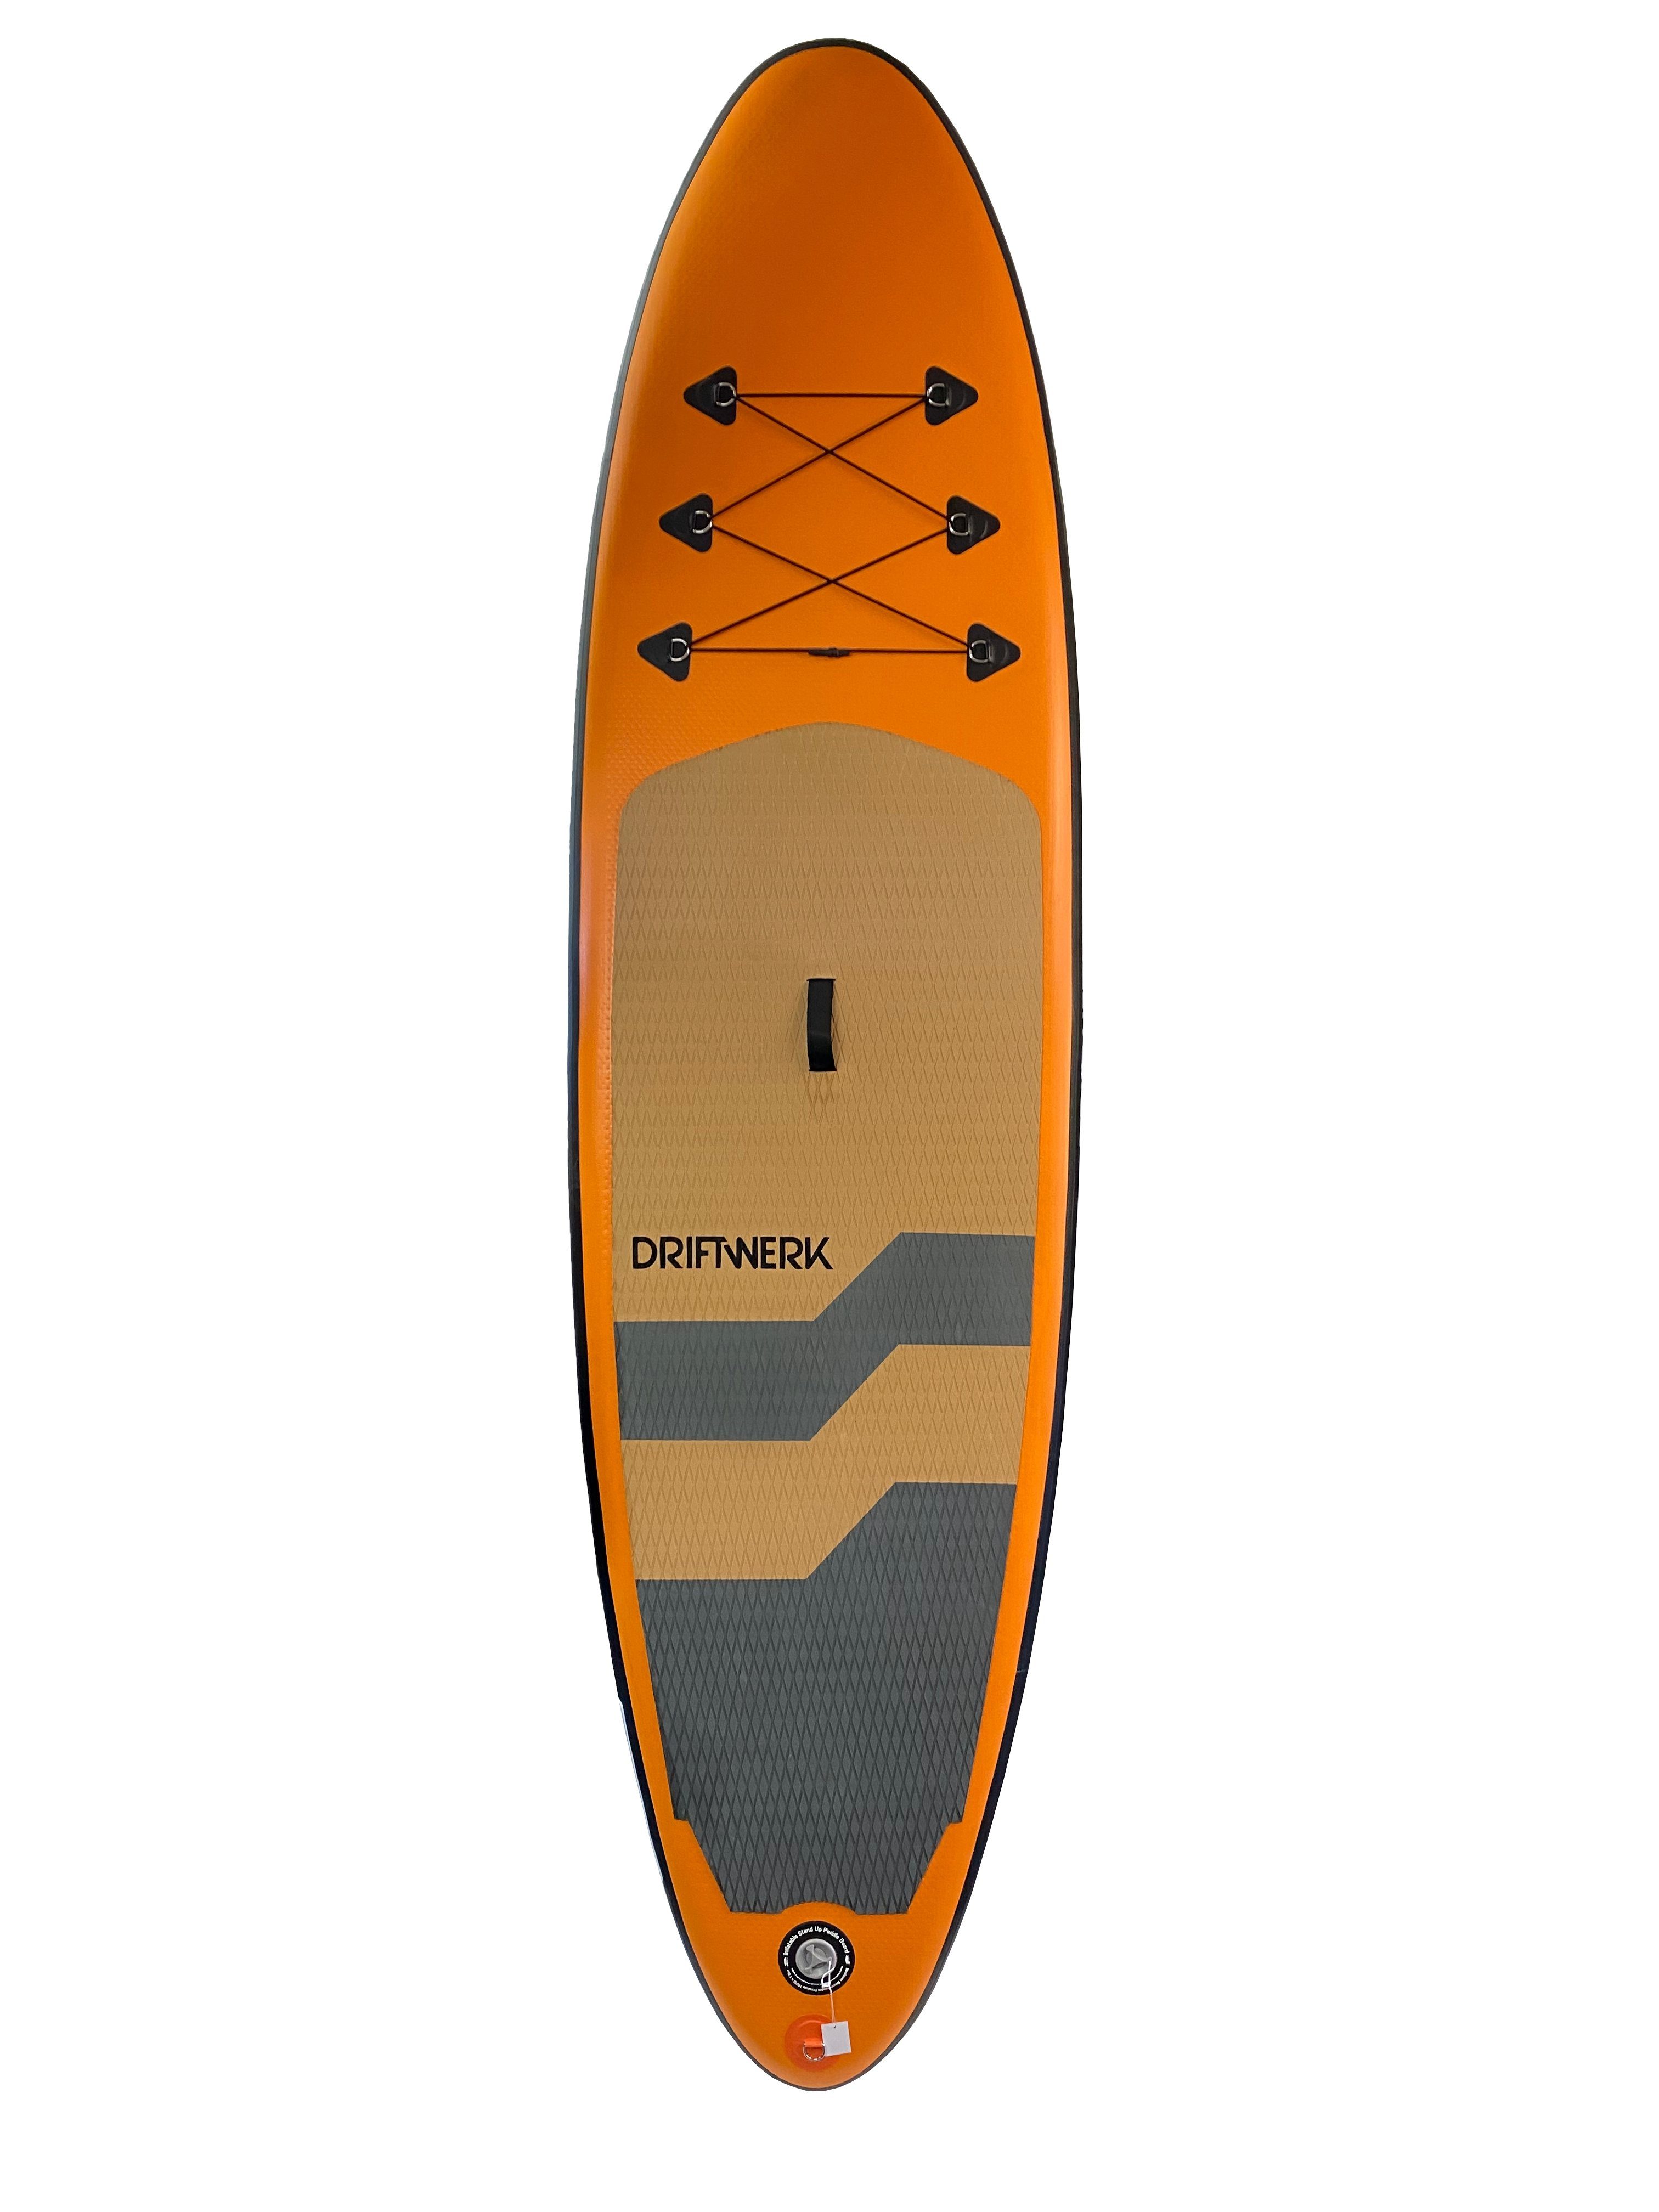 Paddle Paddling Up Board SUP-Board Paddel, Reparatur-Set, Allroundboard, Board Orange / stand Ventilschlüssel) aufblasbar, Pumpe, Transportsack, (mit Set Driftwerk